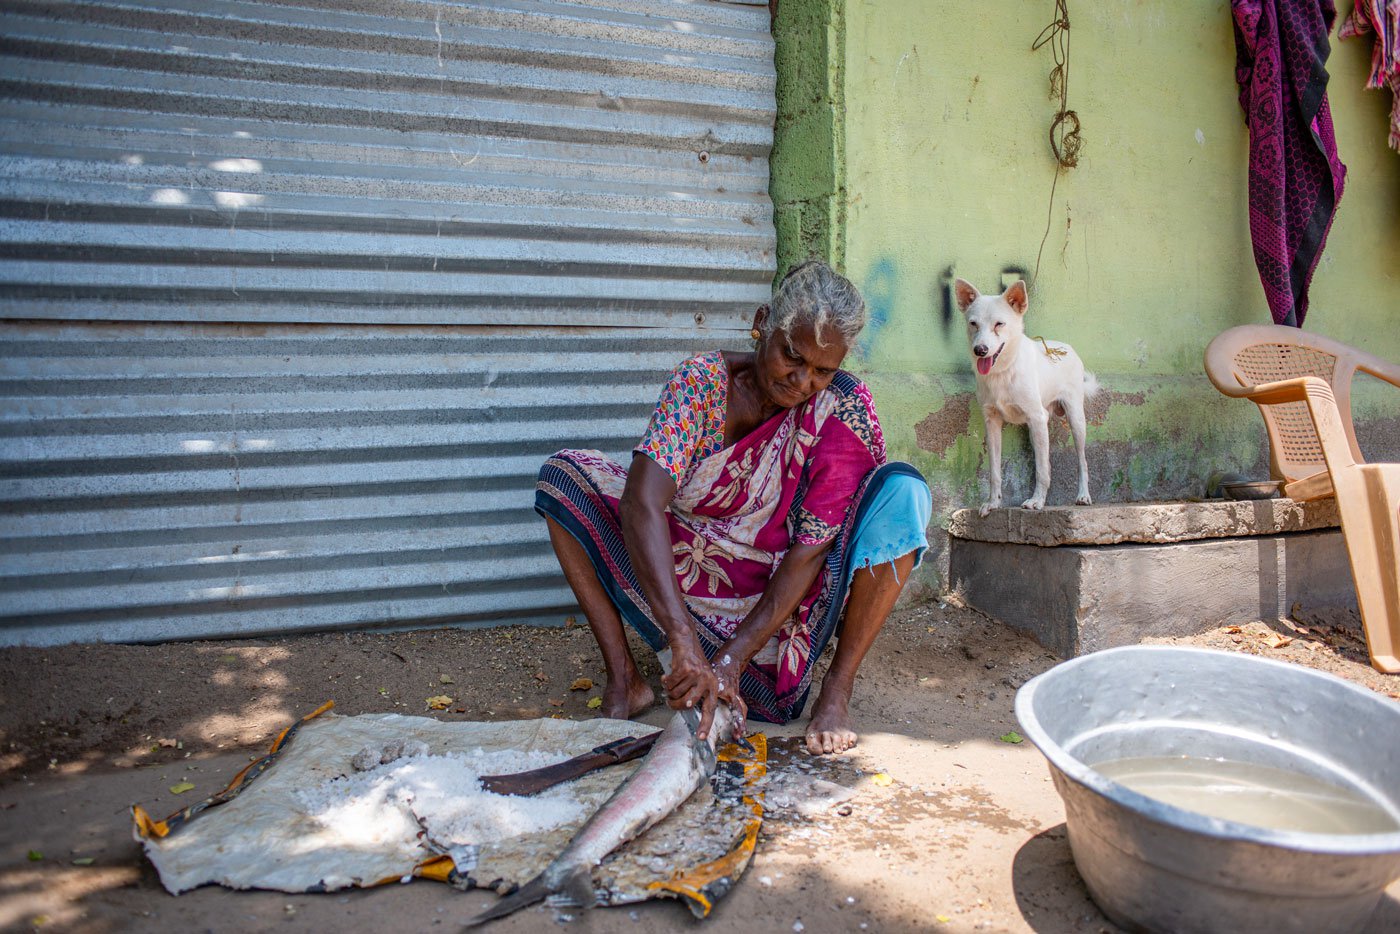 Sahayapurani scrapes off the scales of Poomeen karuvadu as her neighbour's dog watches on